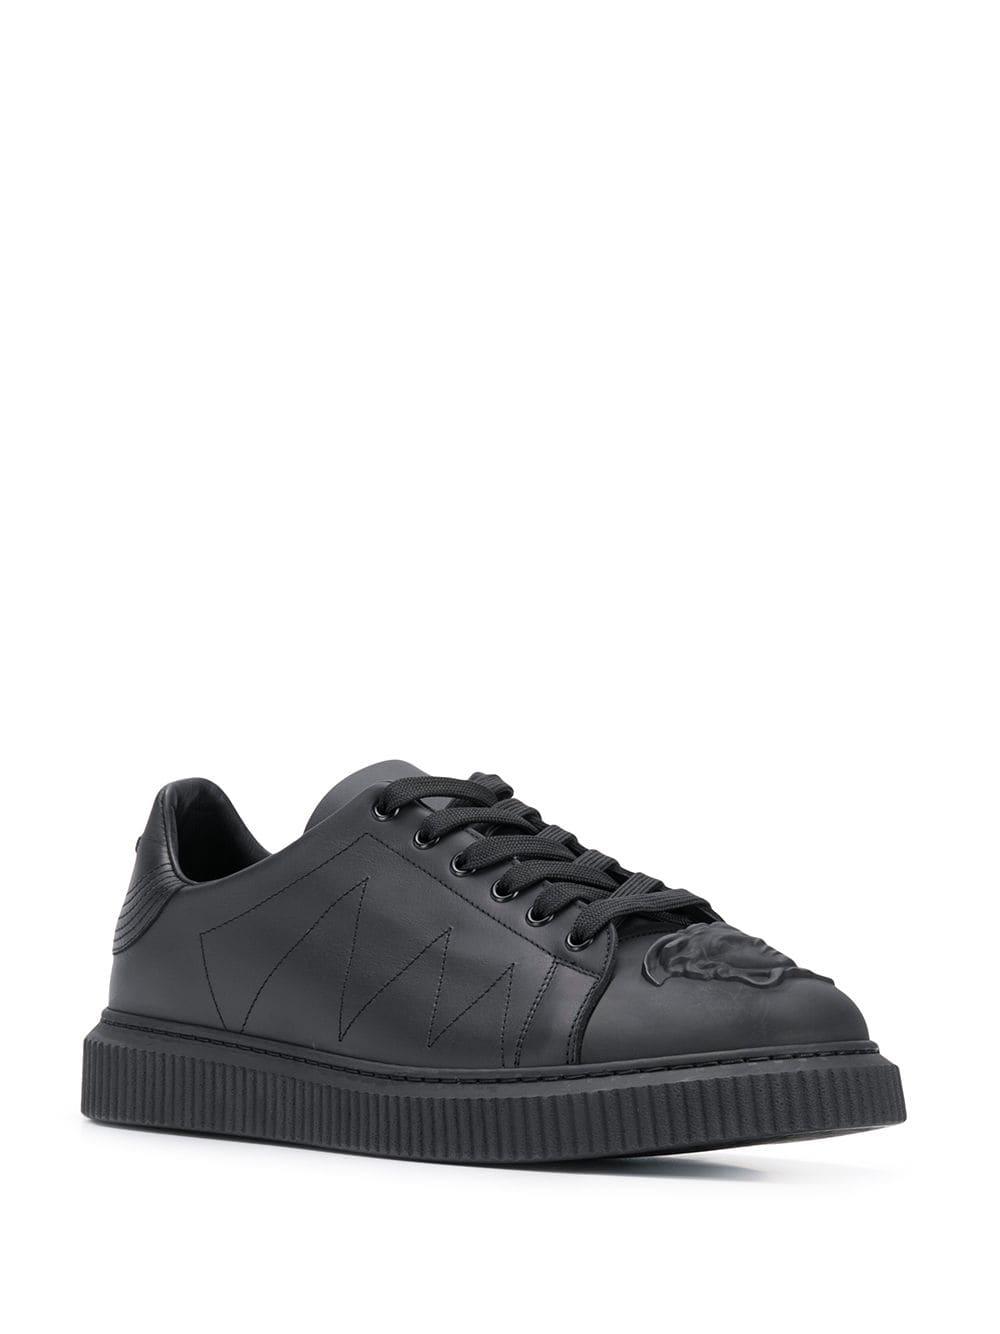 Versace Collection Mens Leather Medusa Logo Low Top Sneaker Shoes Black ...